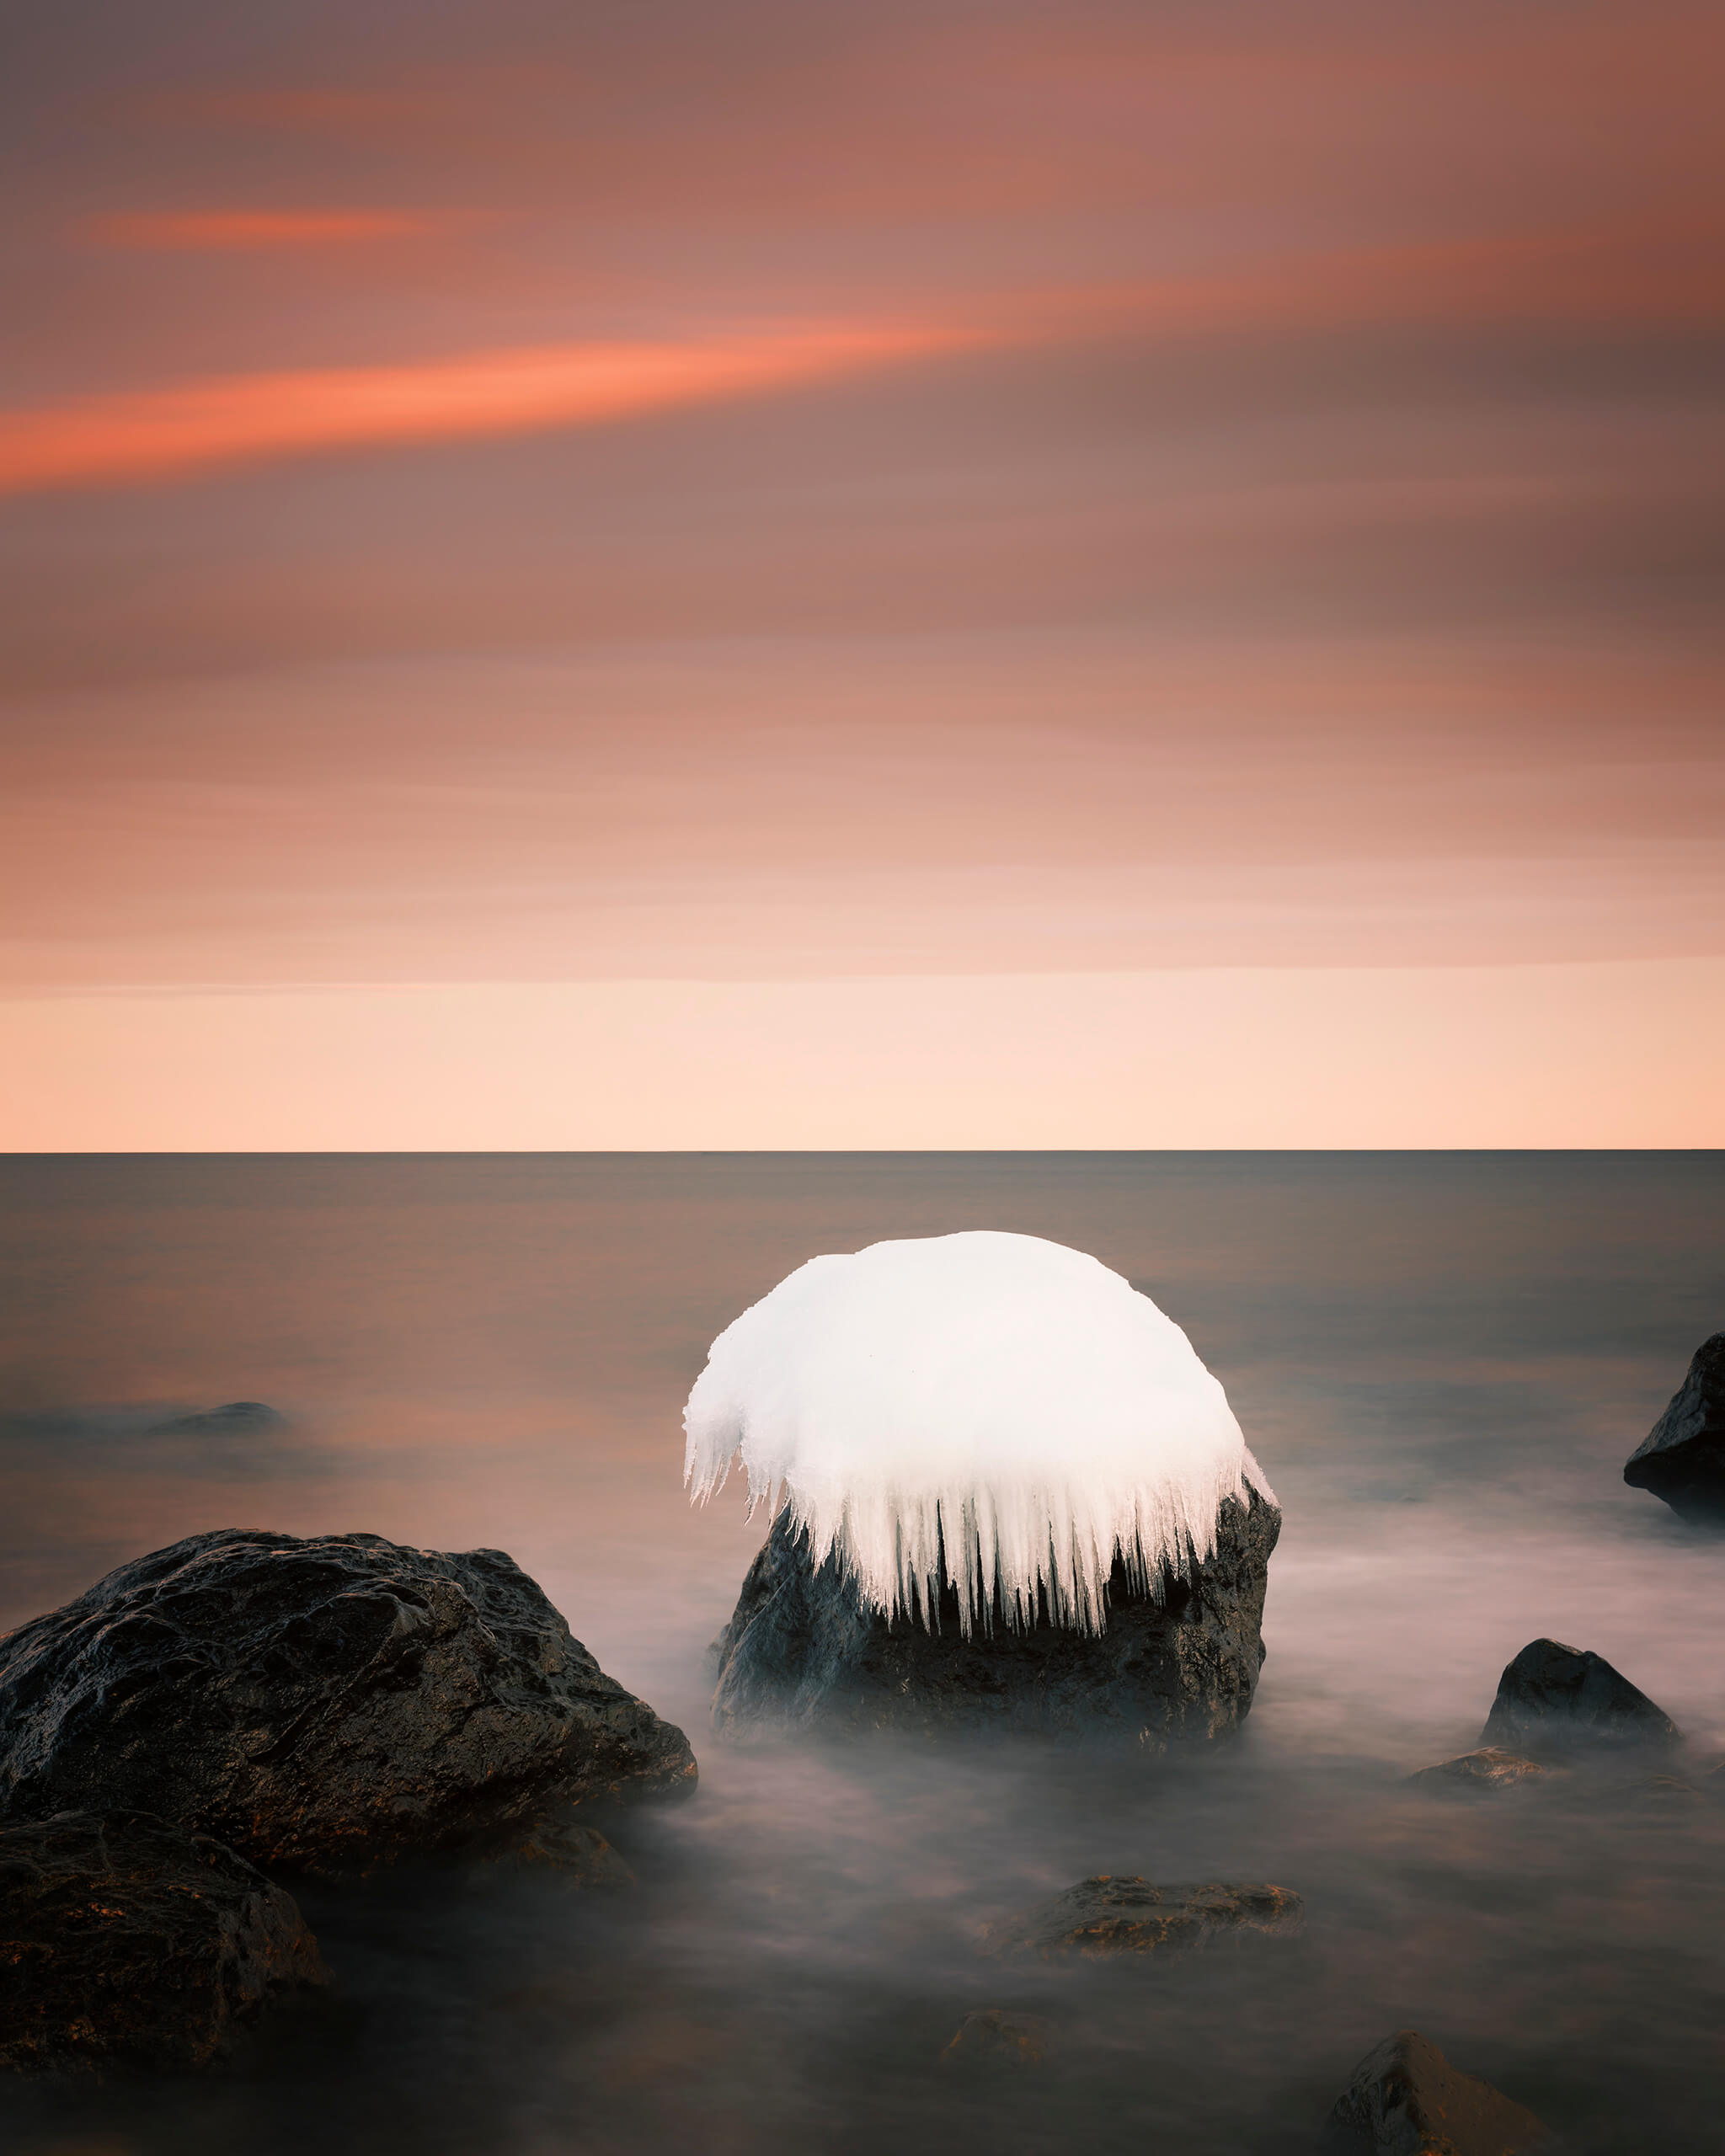 Resilient - photo of melting ice on a rock. Author Joakim Jormelin